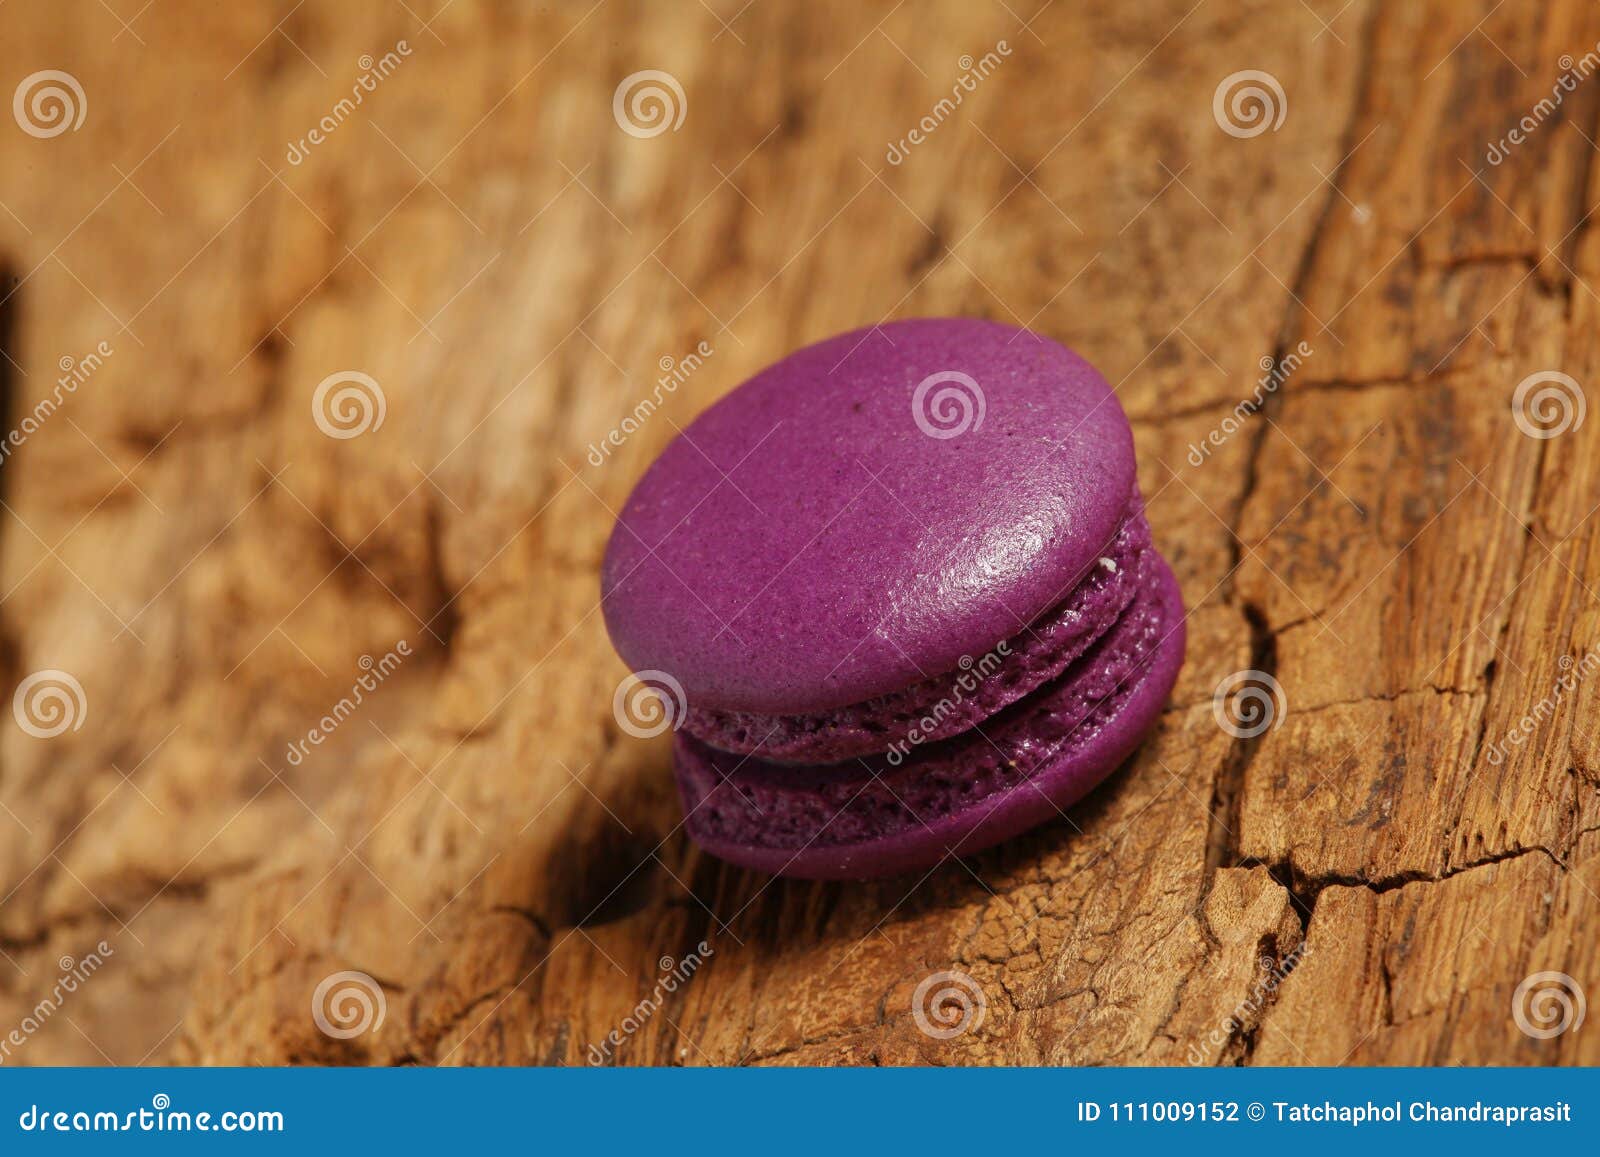 Macaron On Wood Scene Stock Photo Image Of French 111009152